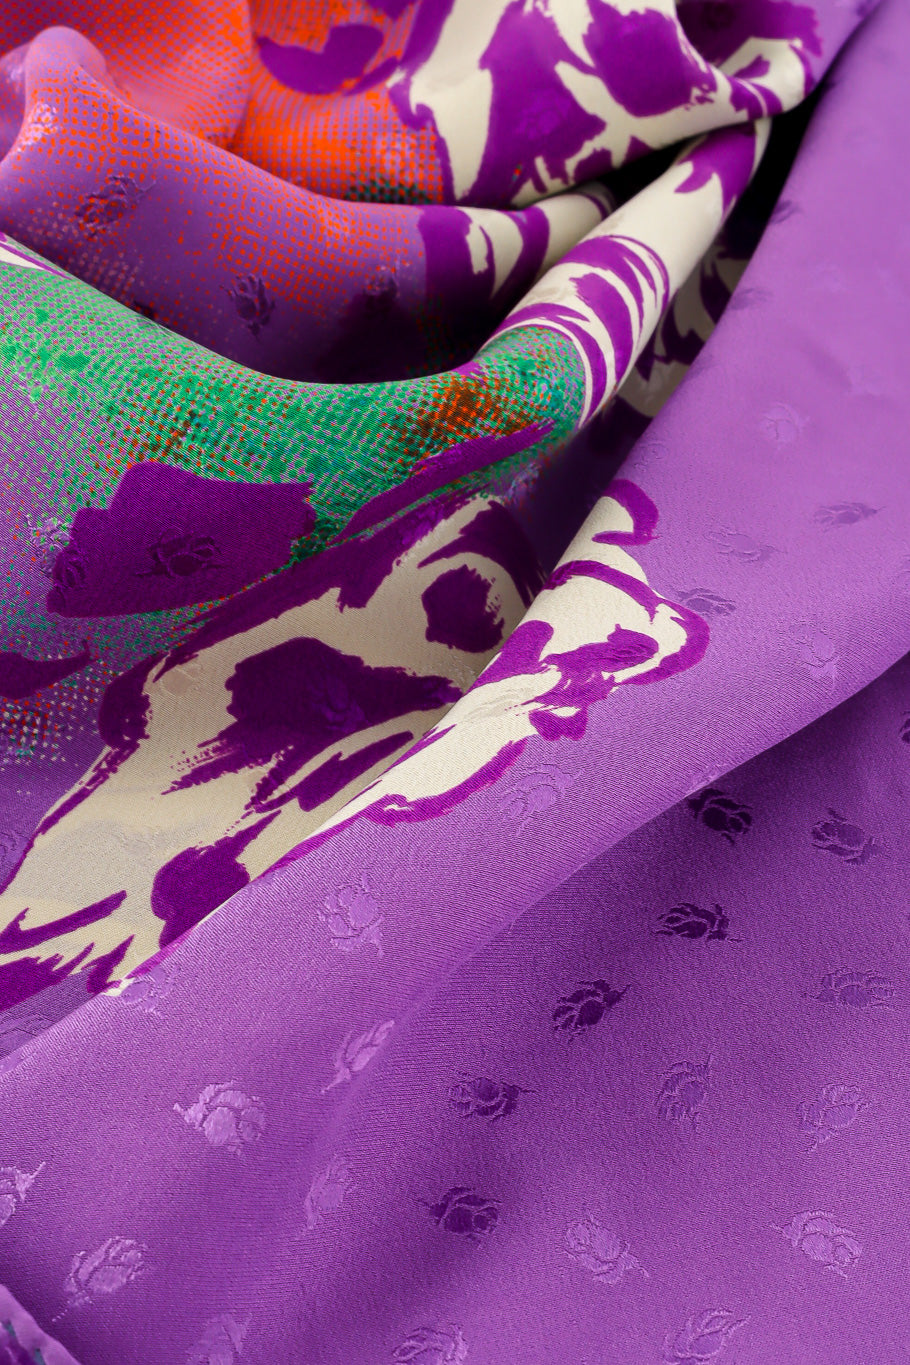 Silk crepe de chine scarf by Emanuel Ungaro Photo of Fabric Details. @recessla